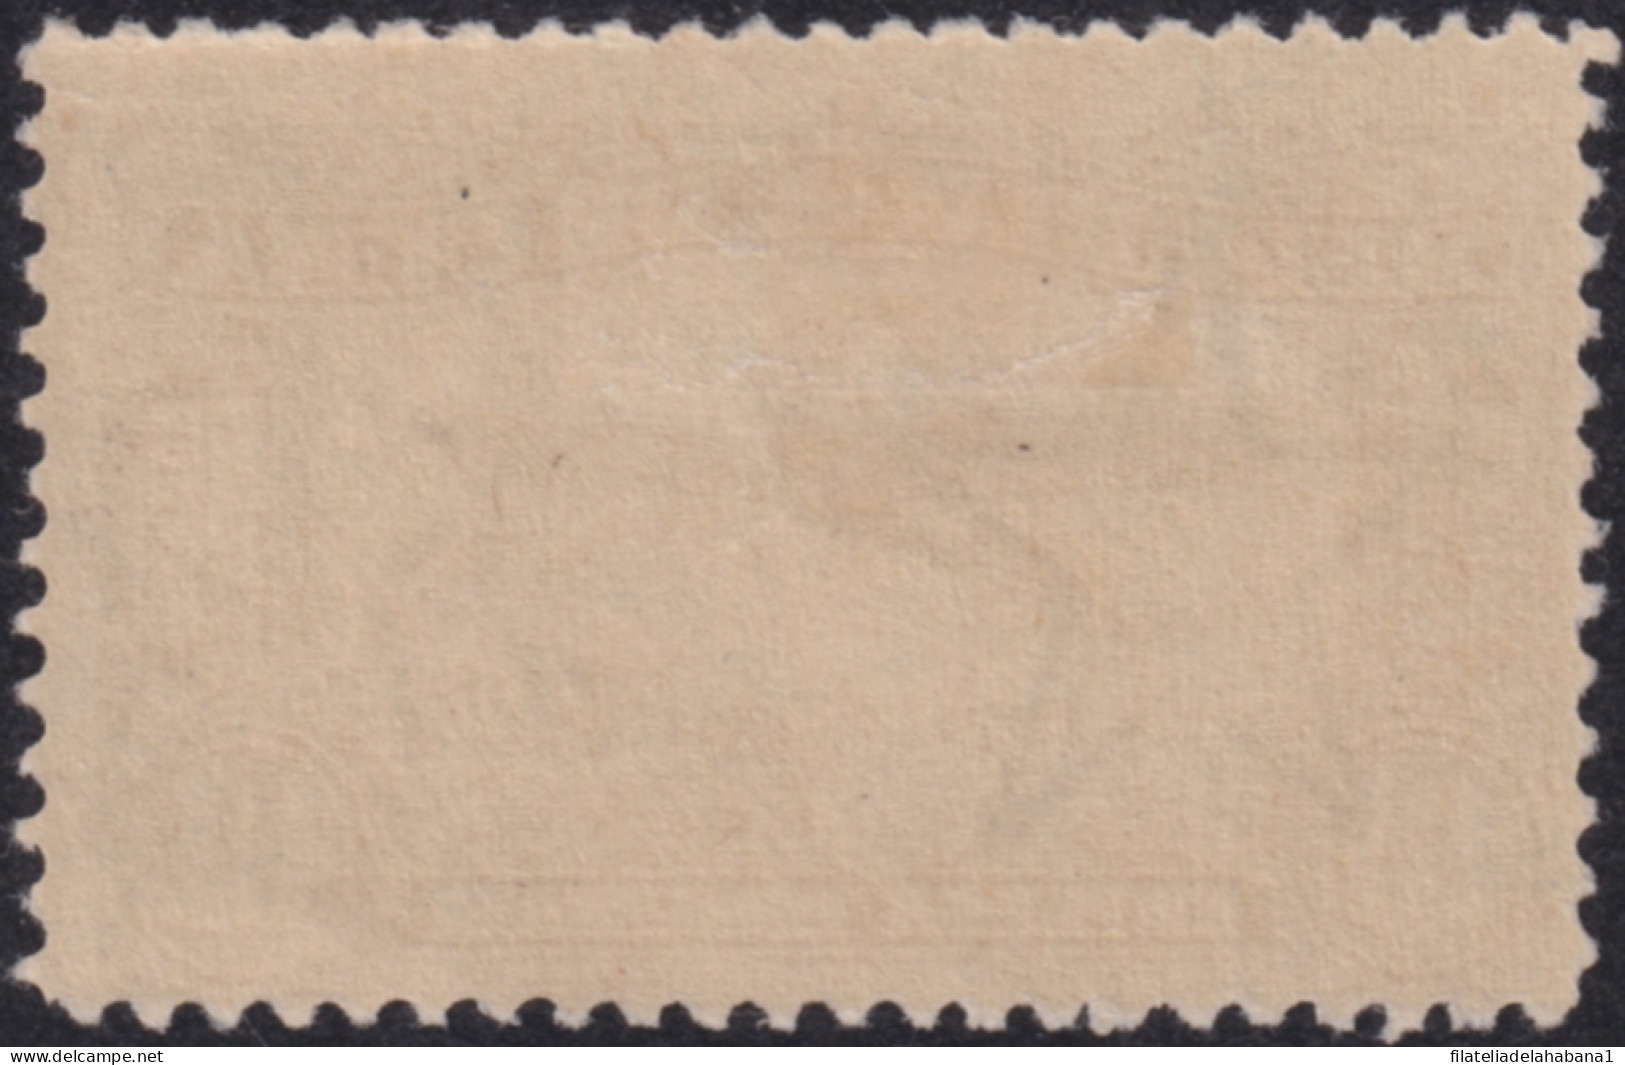 1925-84 CUBA REPUBLICA 1925 MH 10c SPECIAL DELIVERY AIRPLANE MORANE. - Unused Stamps